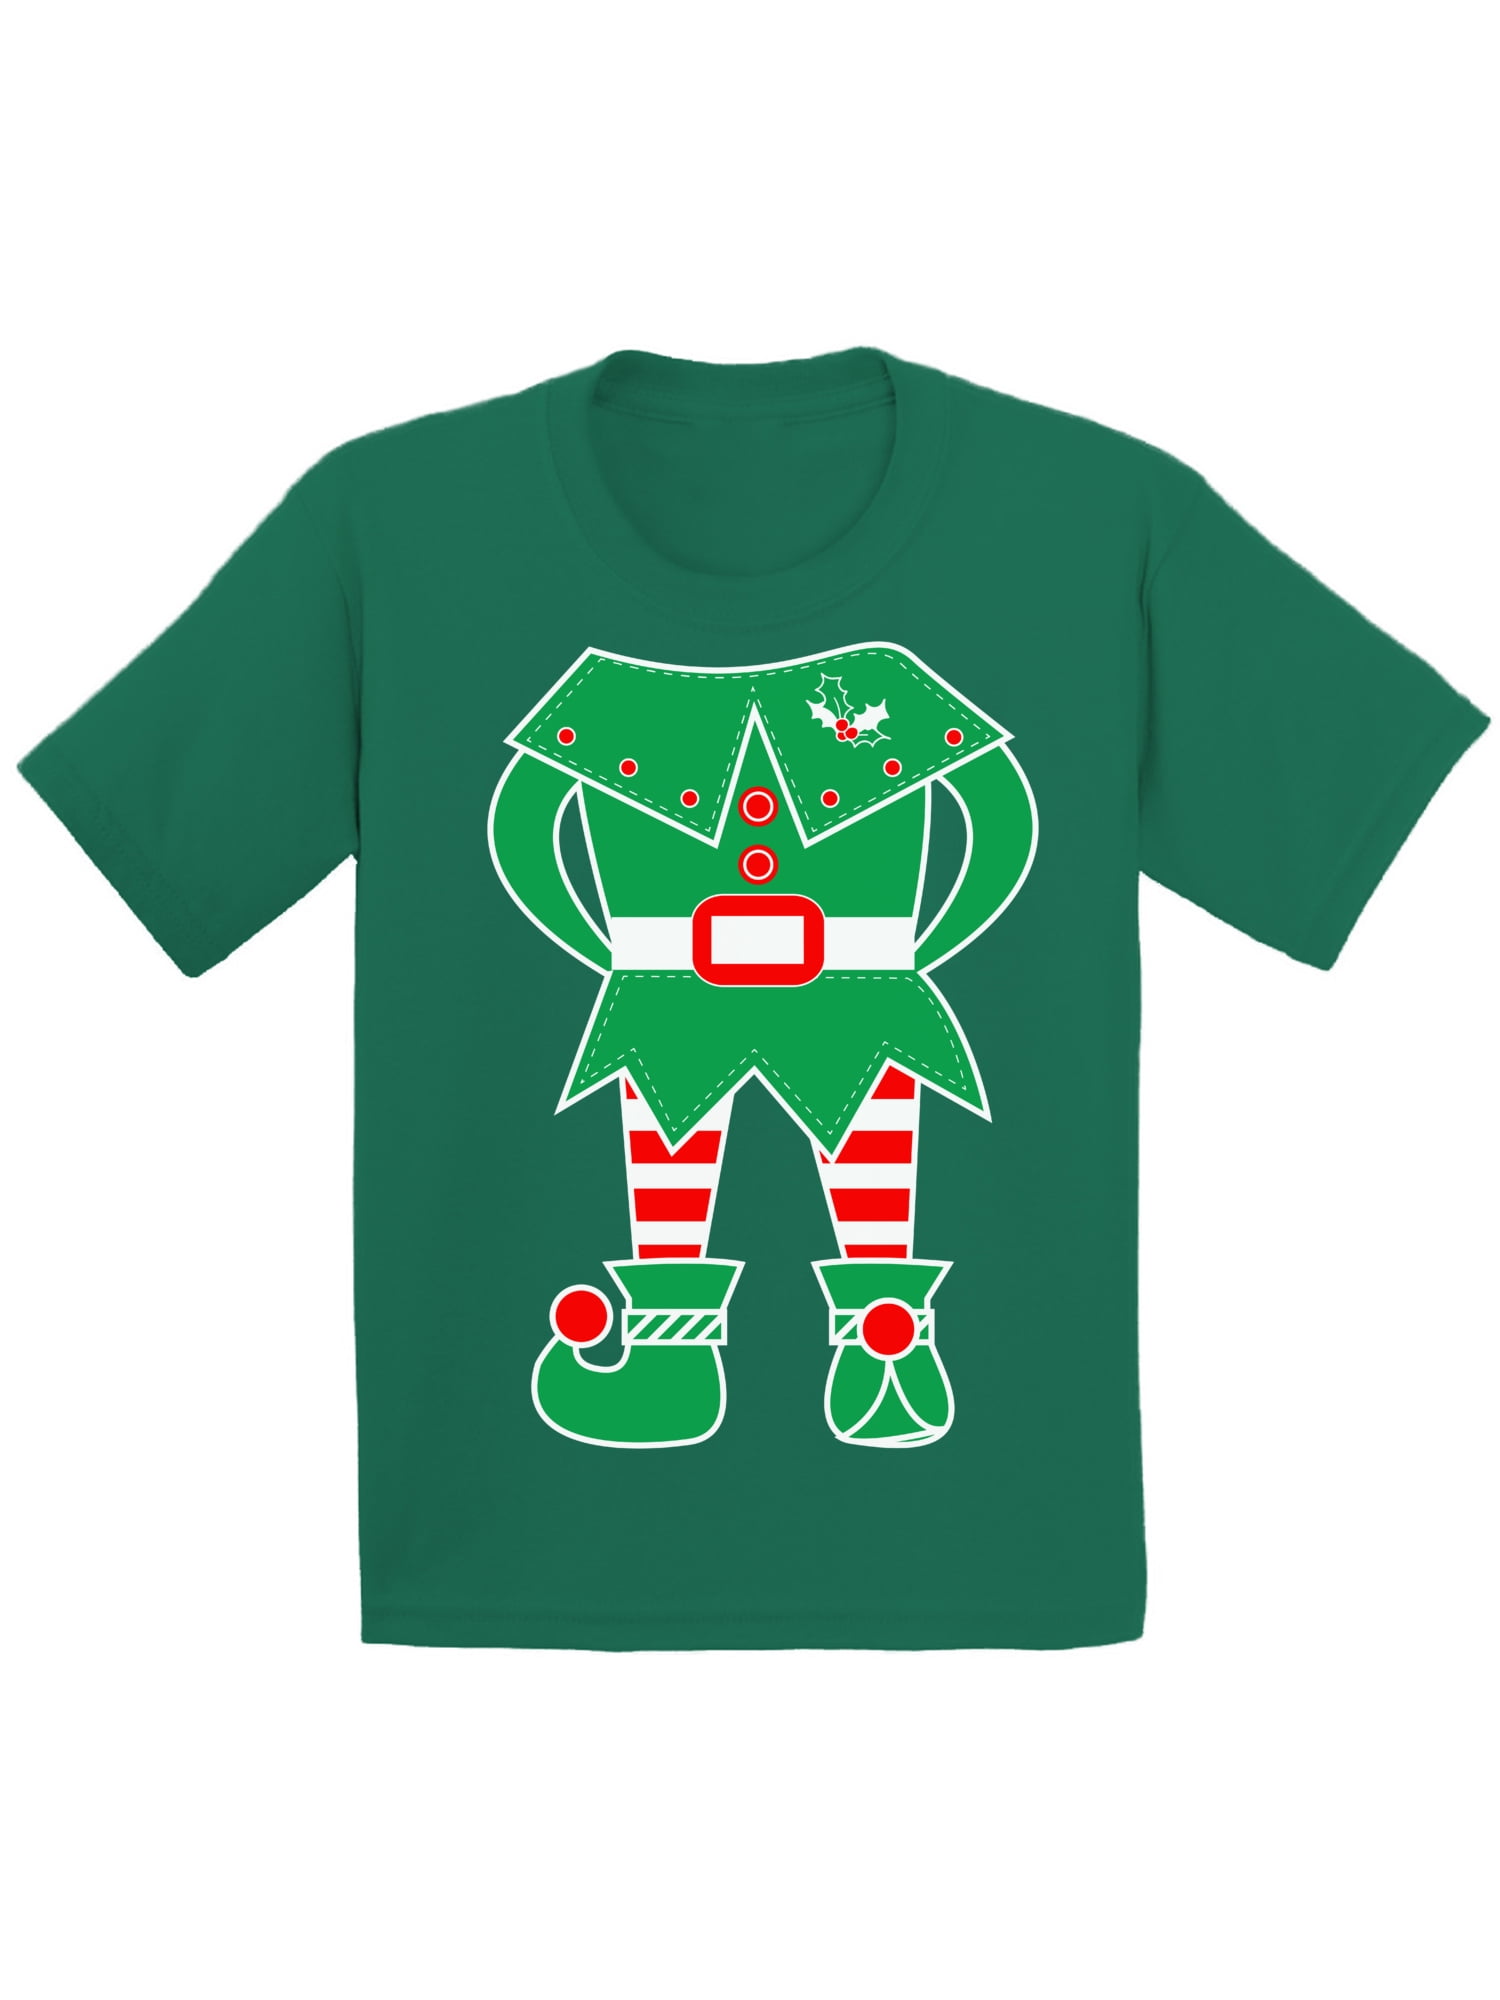 Awkward Styles Ugly Christmas T-Shirt for Boys Girls Green Elf Xmas ...